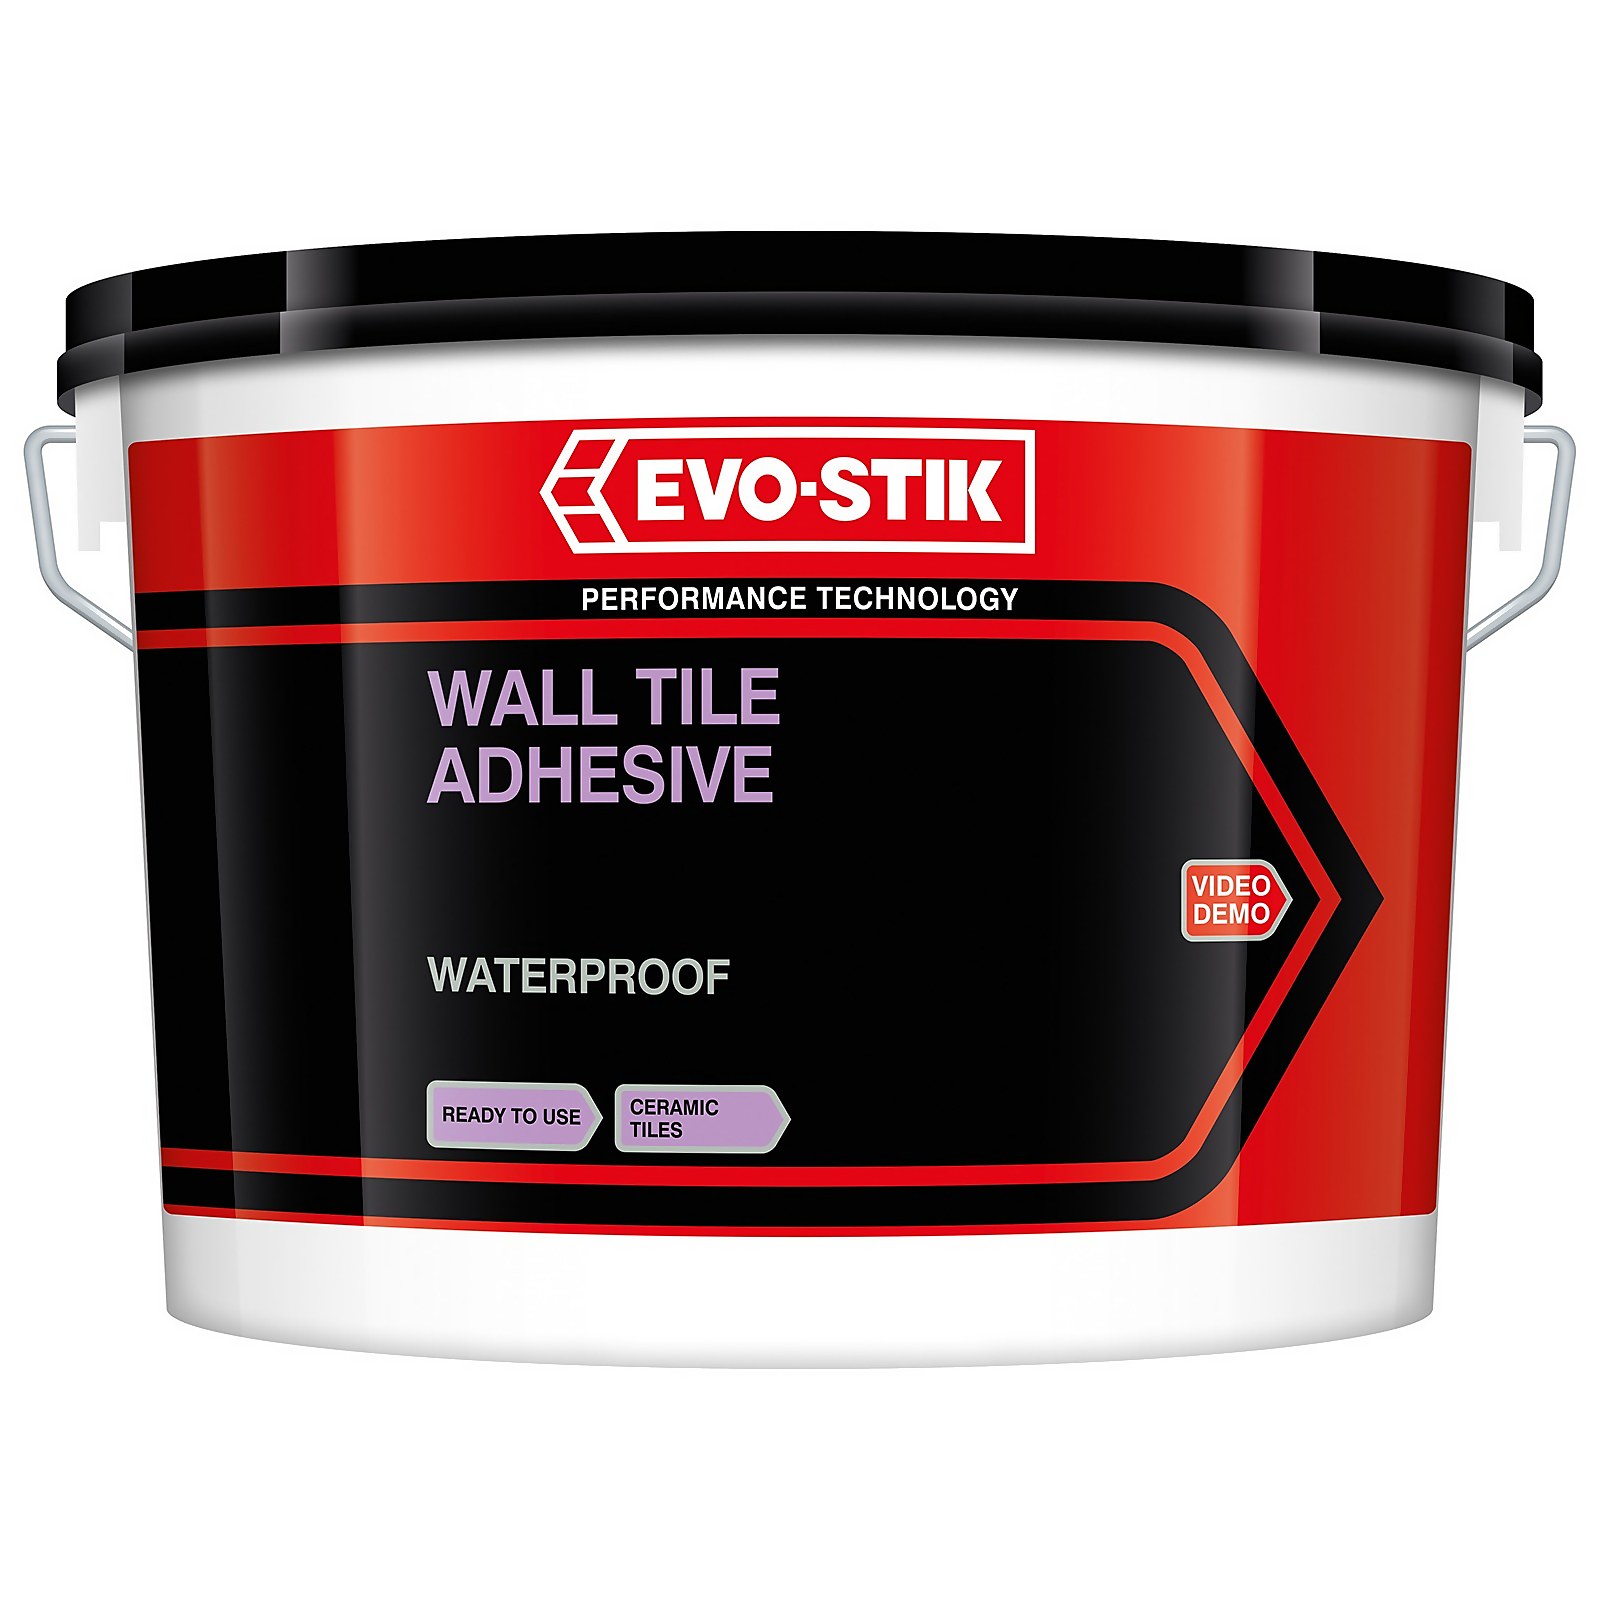 Photo of Evo-stik Waterproof Wall Tile Adhesive Large